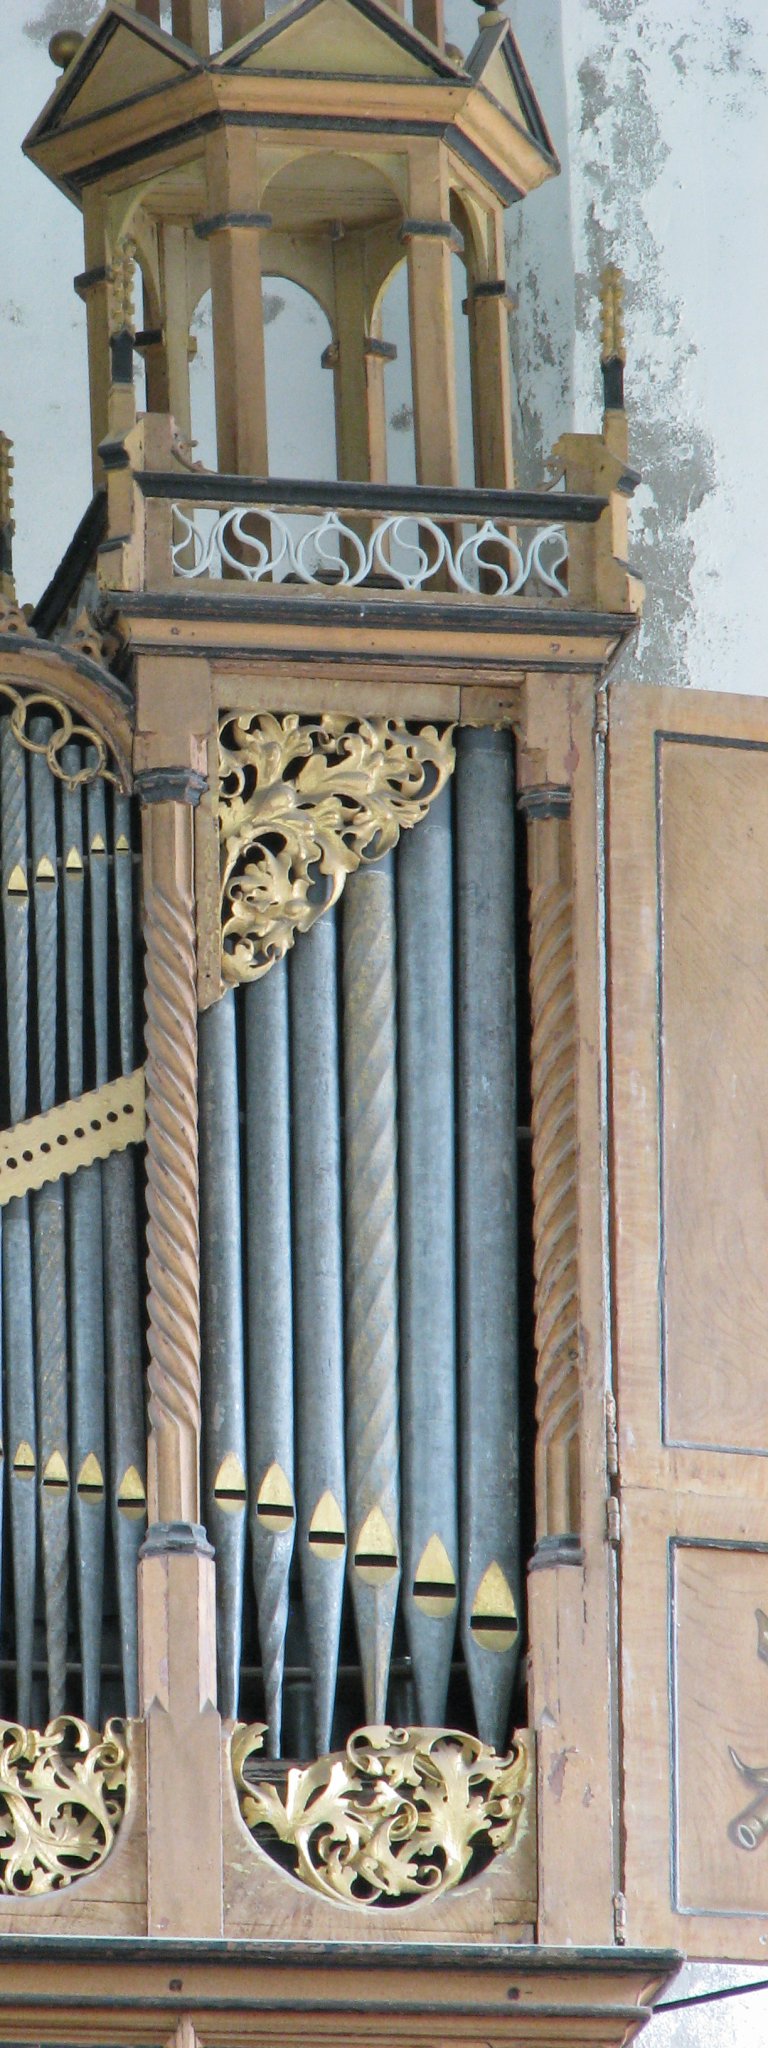 Orgel 1521